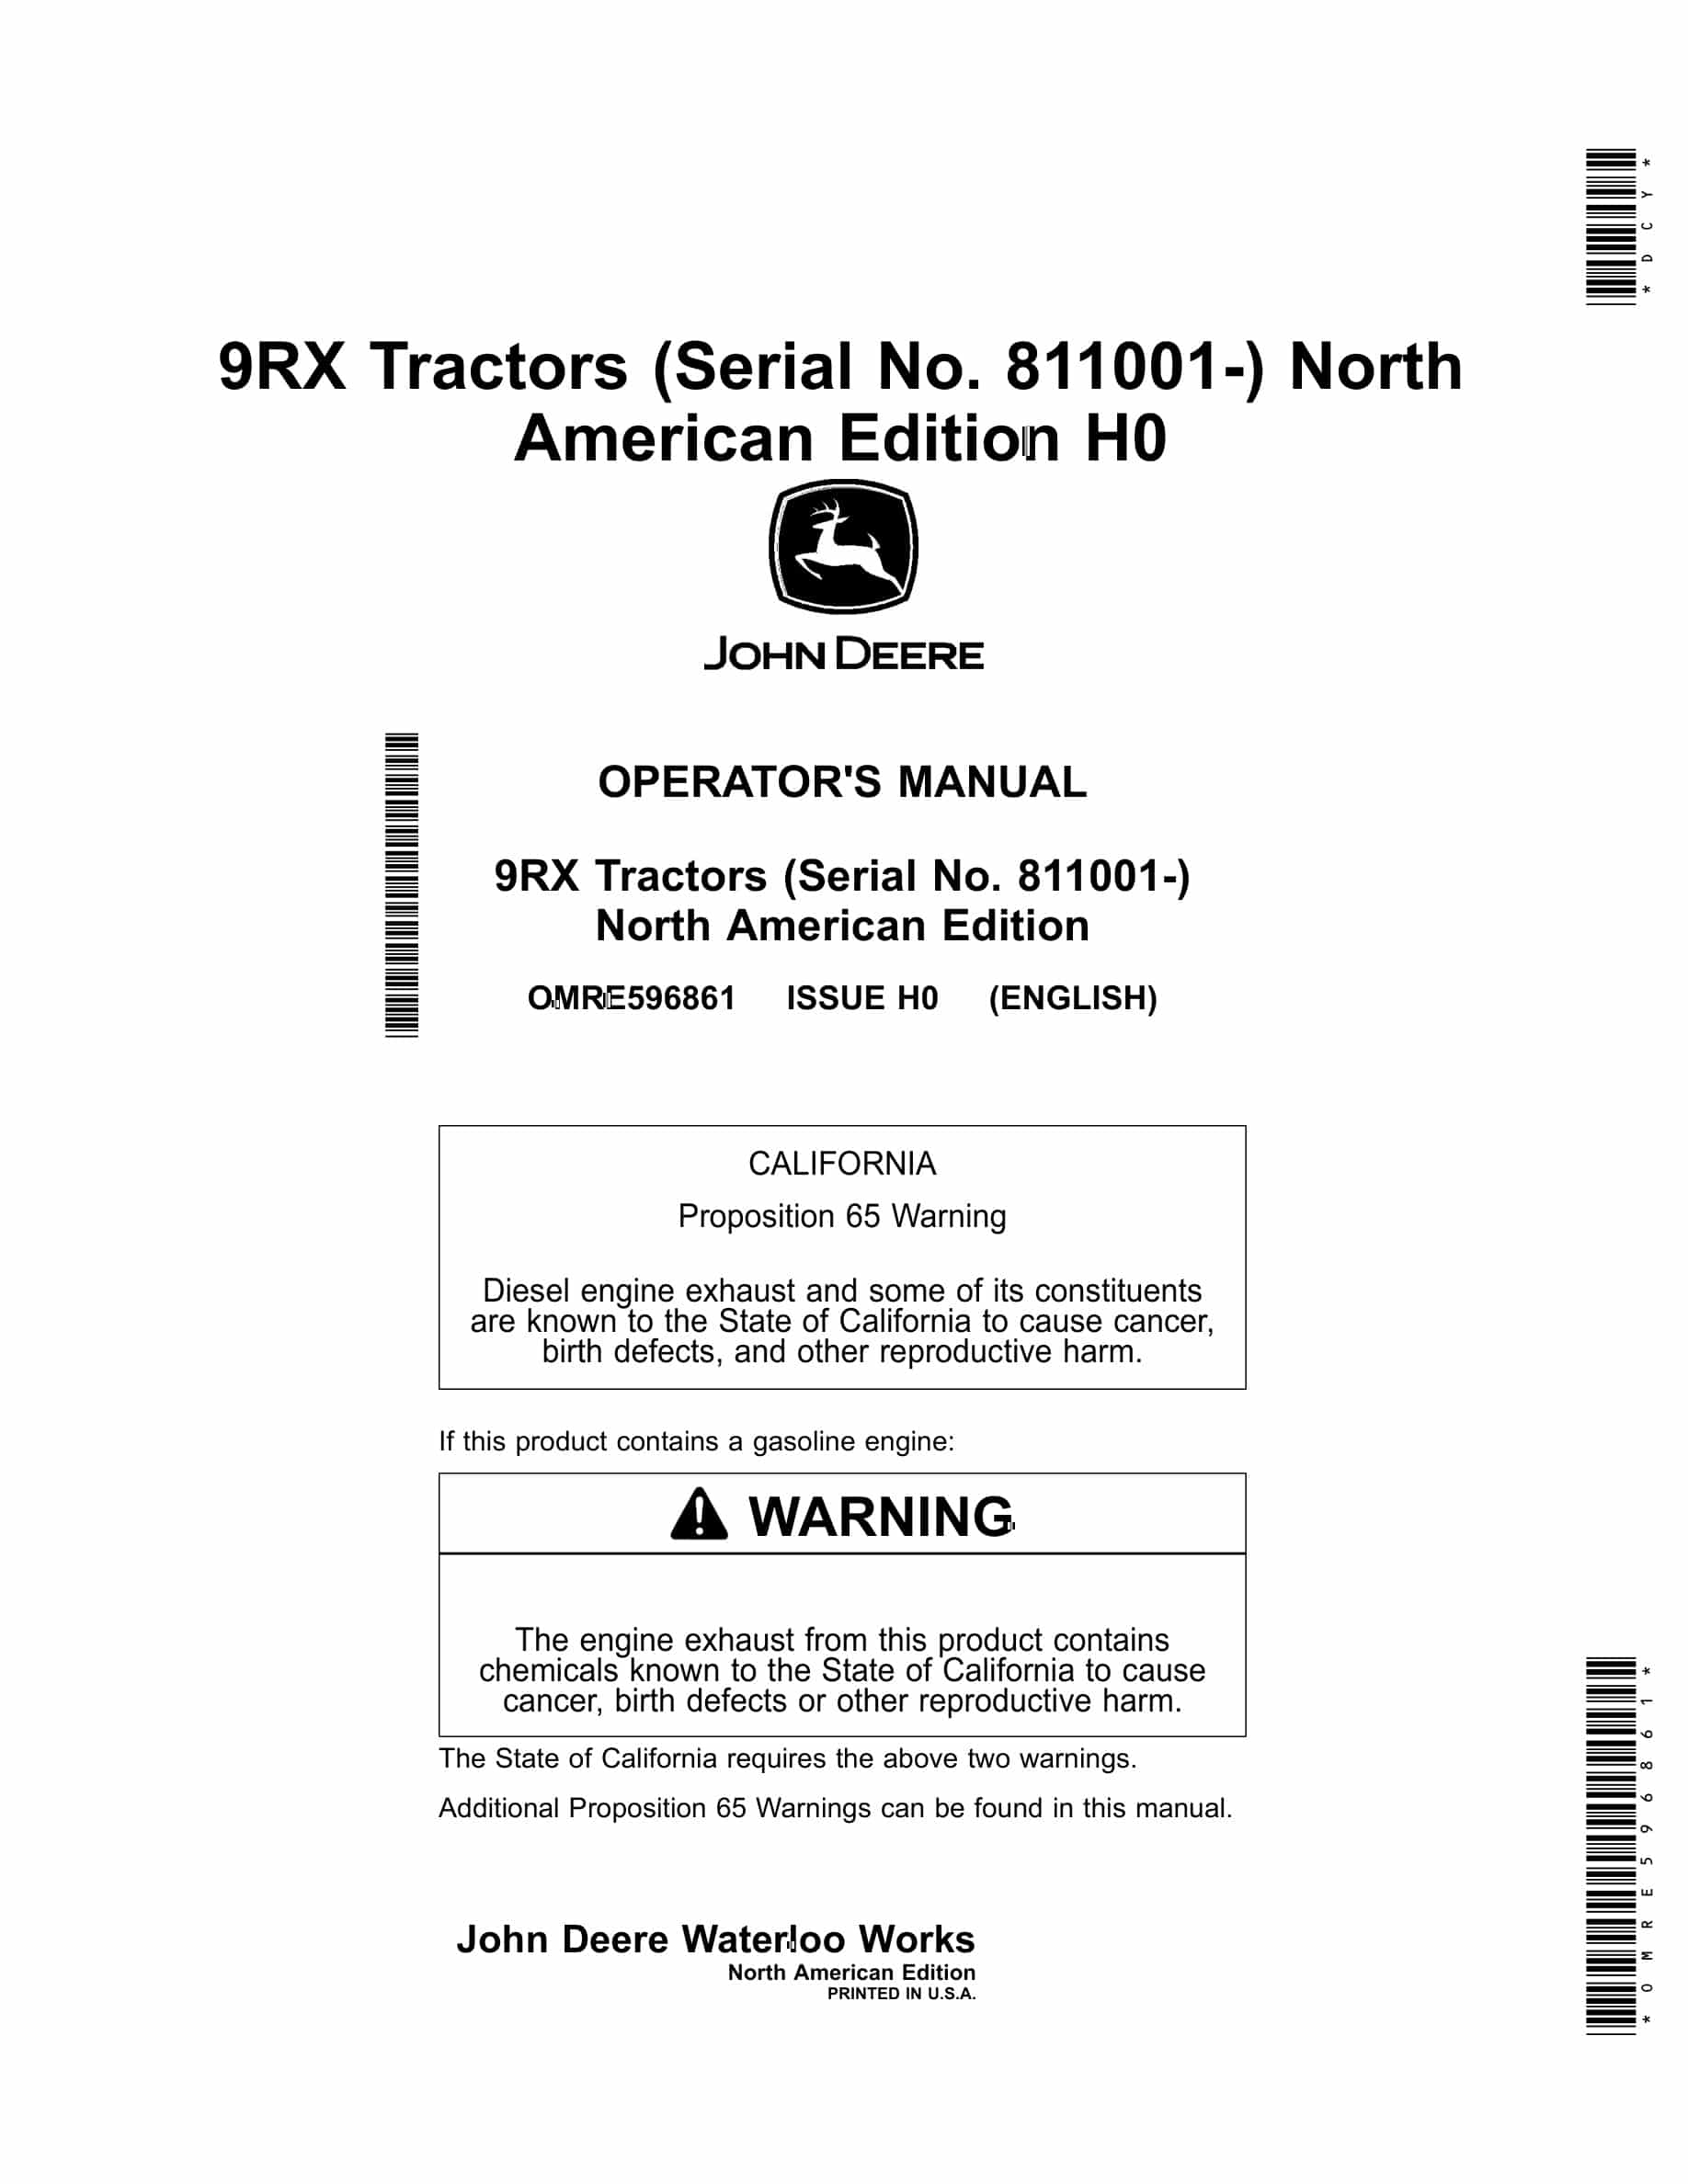 John Deere 9RX Tractor Operator Manual OMRE596861-1